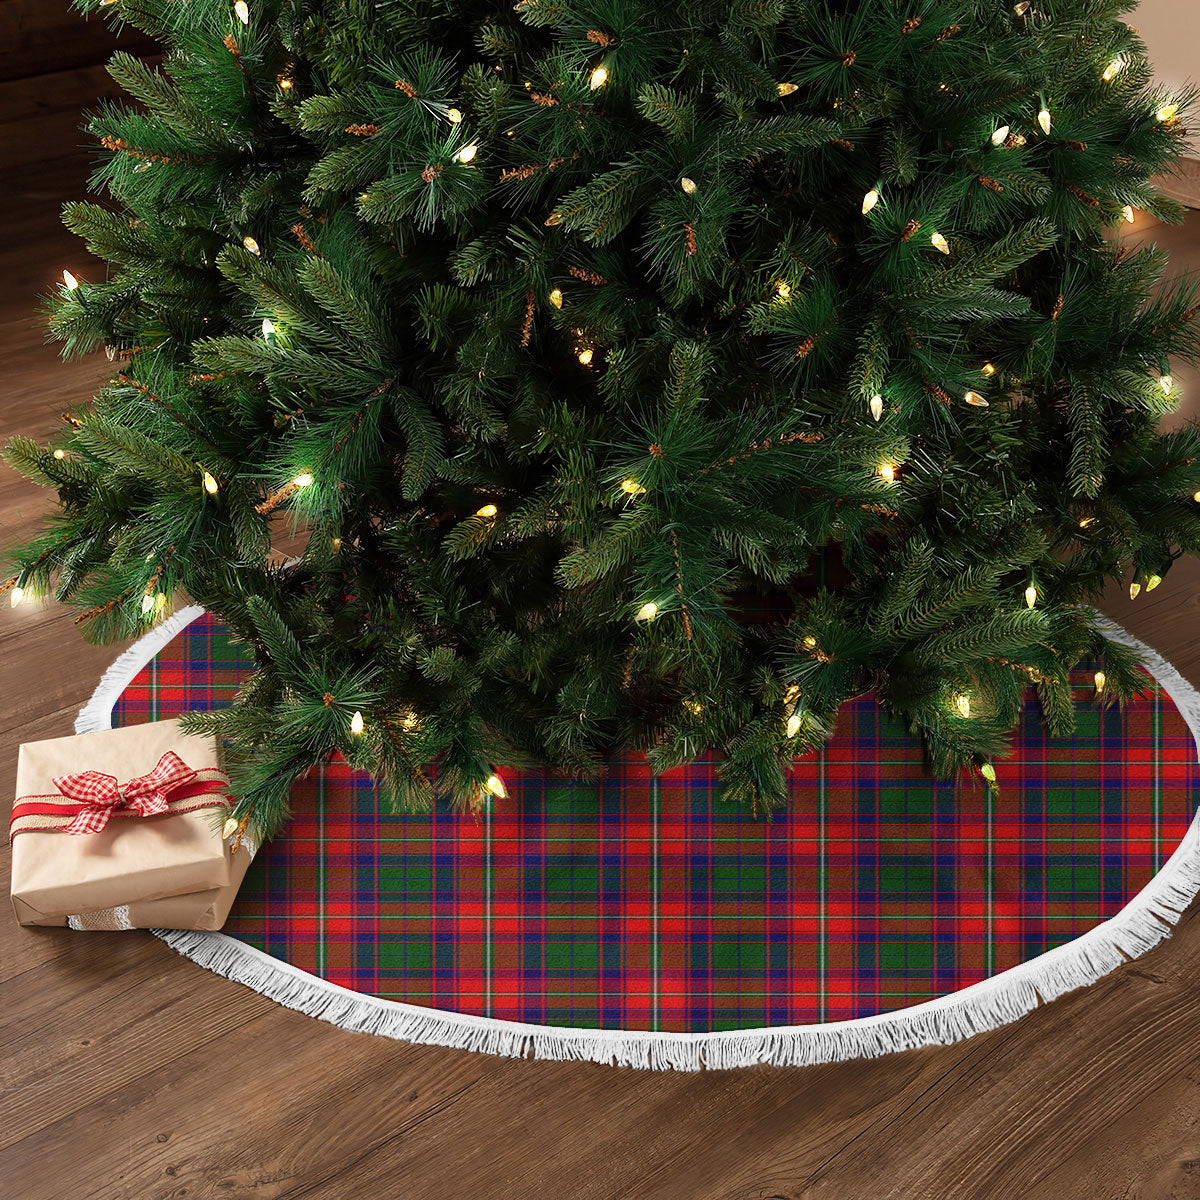 Wauchope (or Waugh) Tartan Christmas Tree Skirt